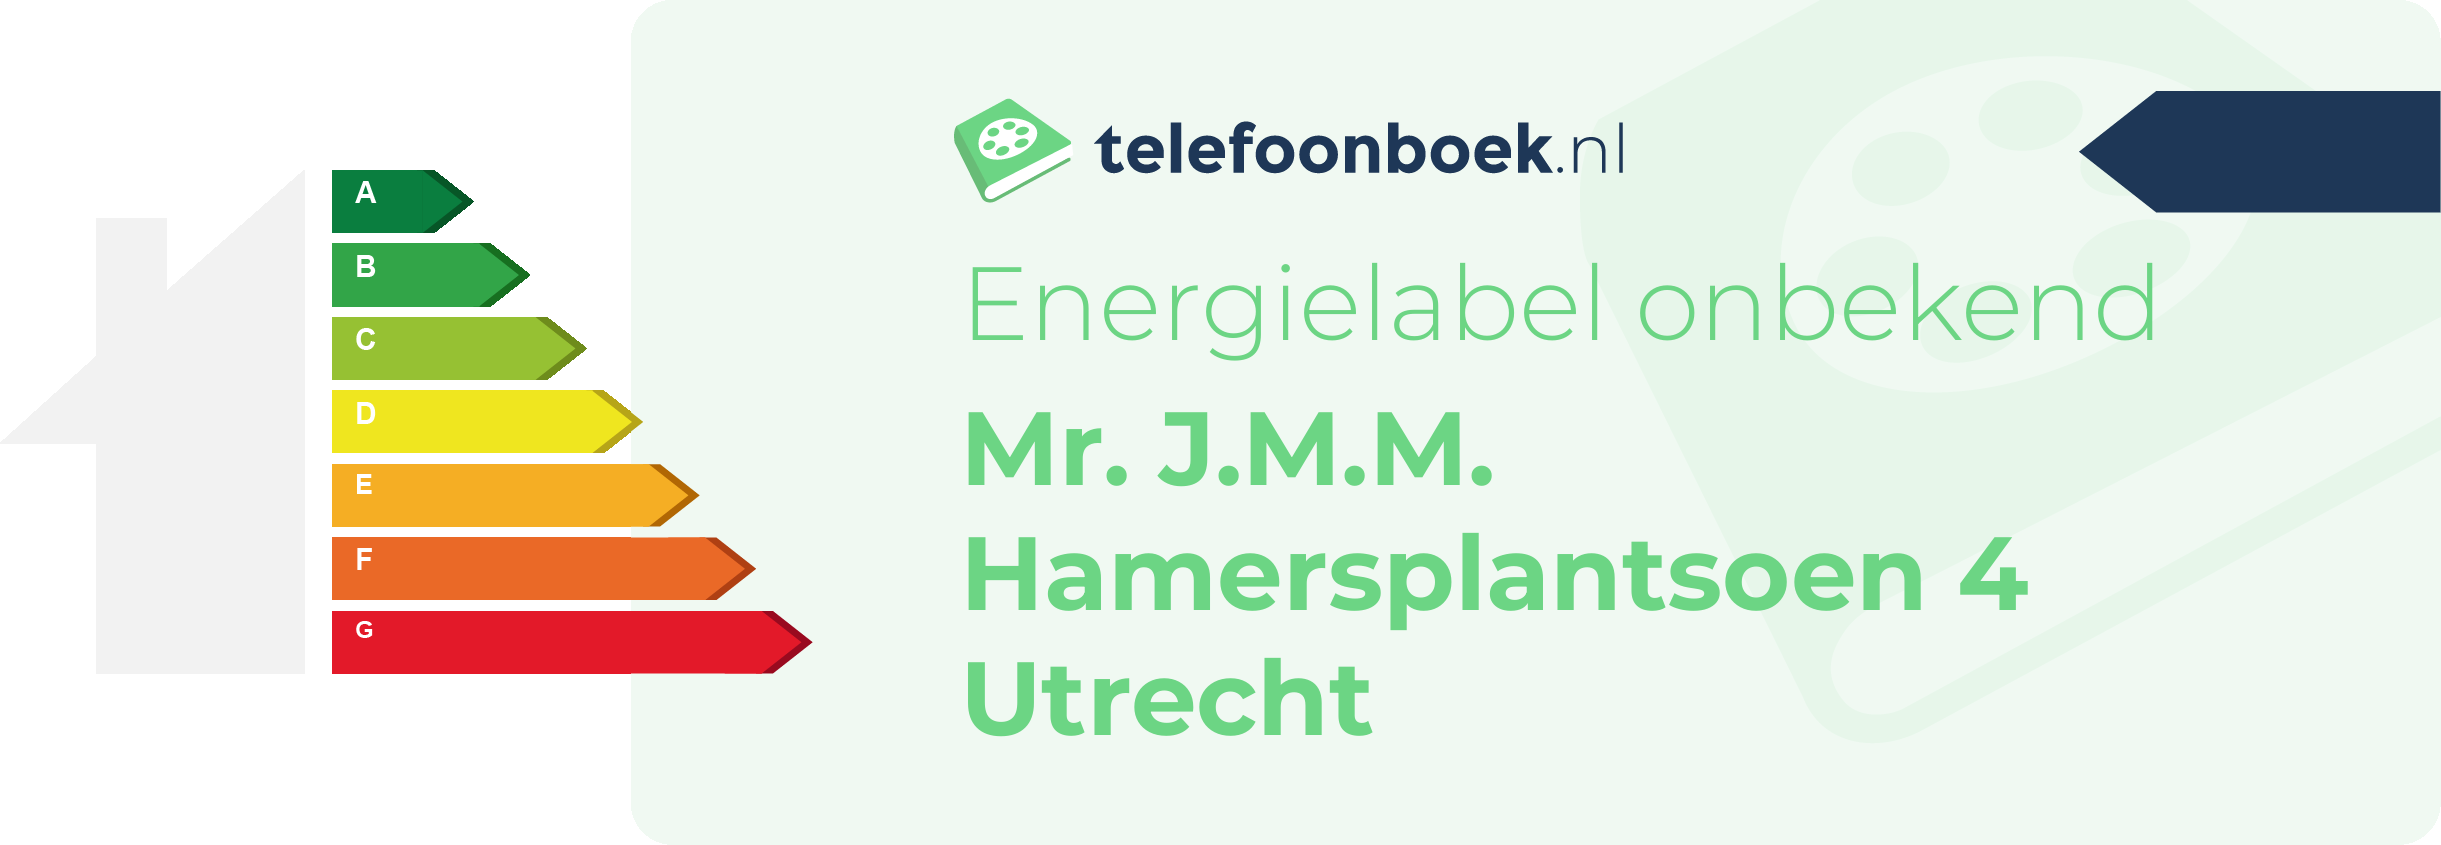 Energielabel Mr. J.M.M. Hamersplantsoen 4 Utrecht